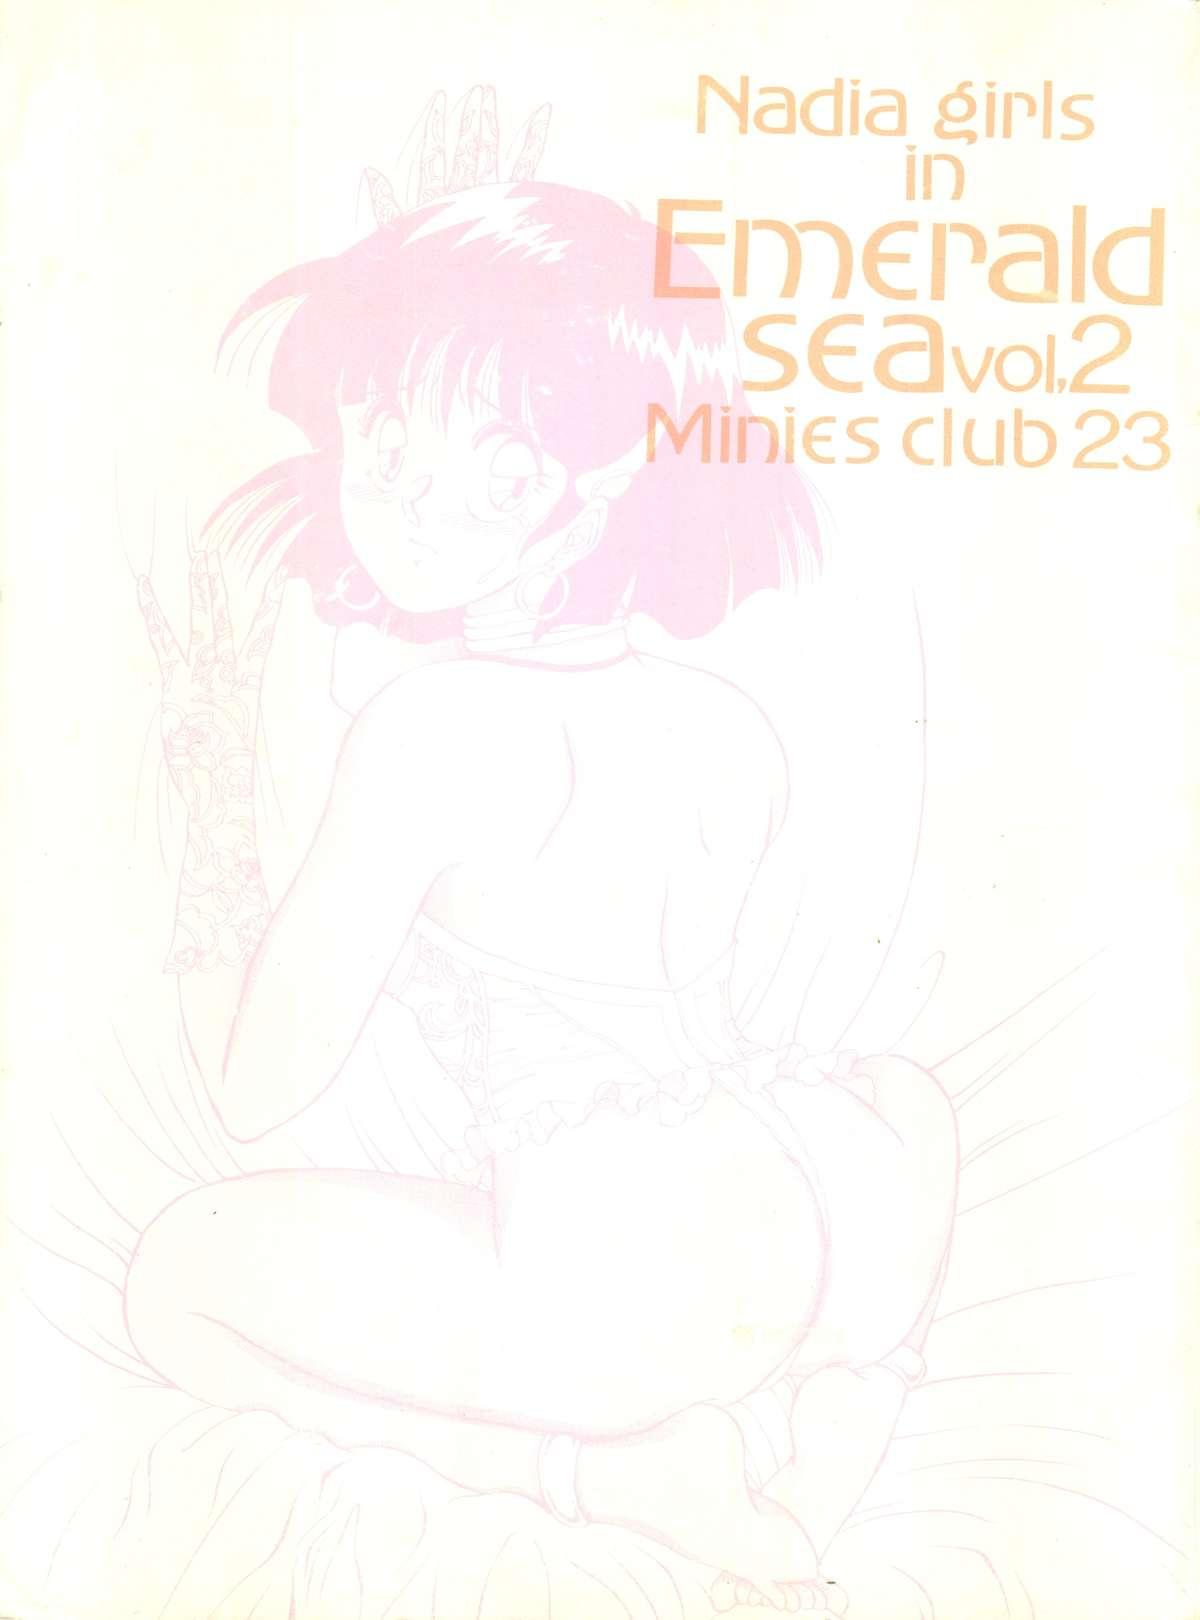 Caught Nadia Girls in Emerald Sea vol. 2 - Minies Club 23 - Fushigi no umi no nadia Asiansex - Picture 1